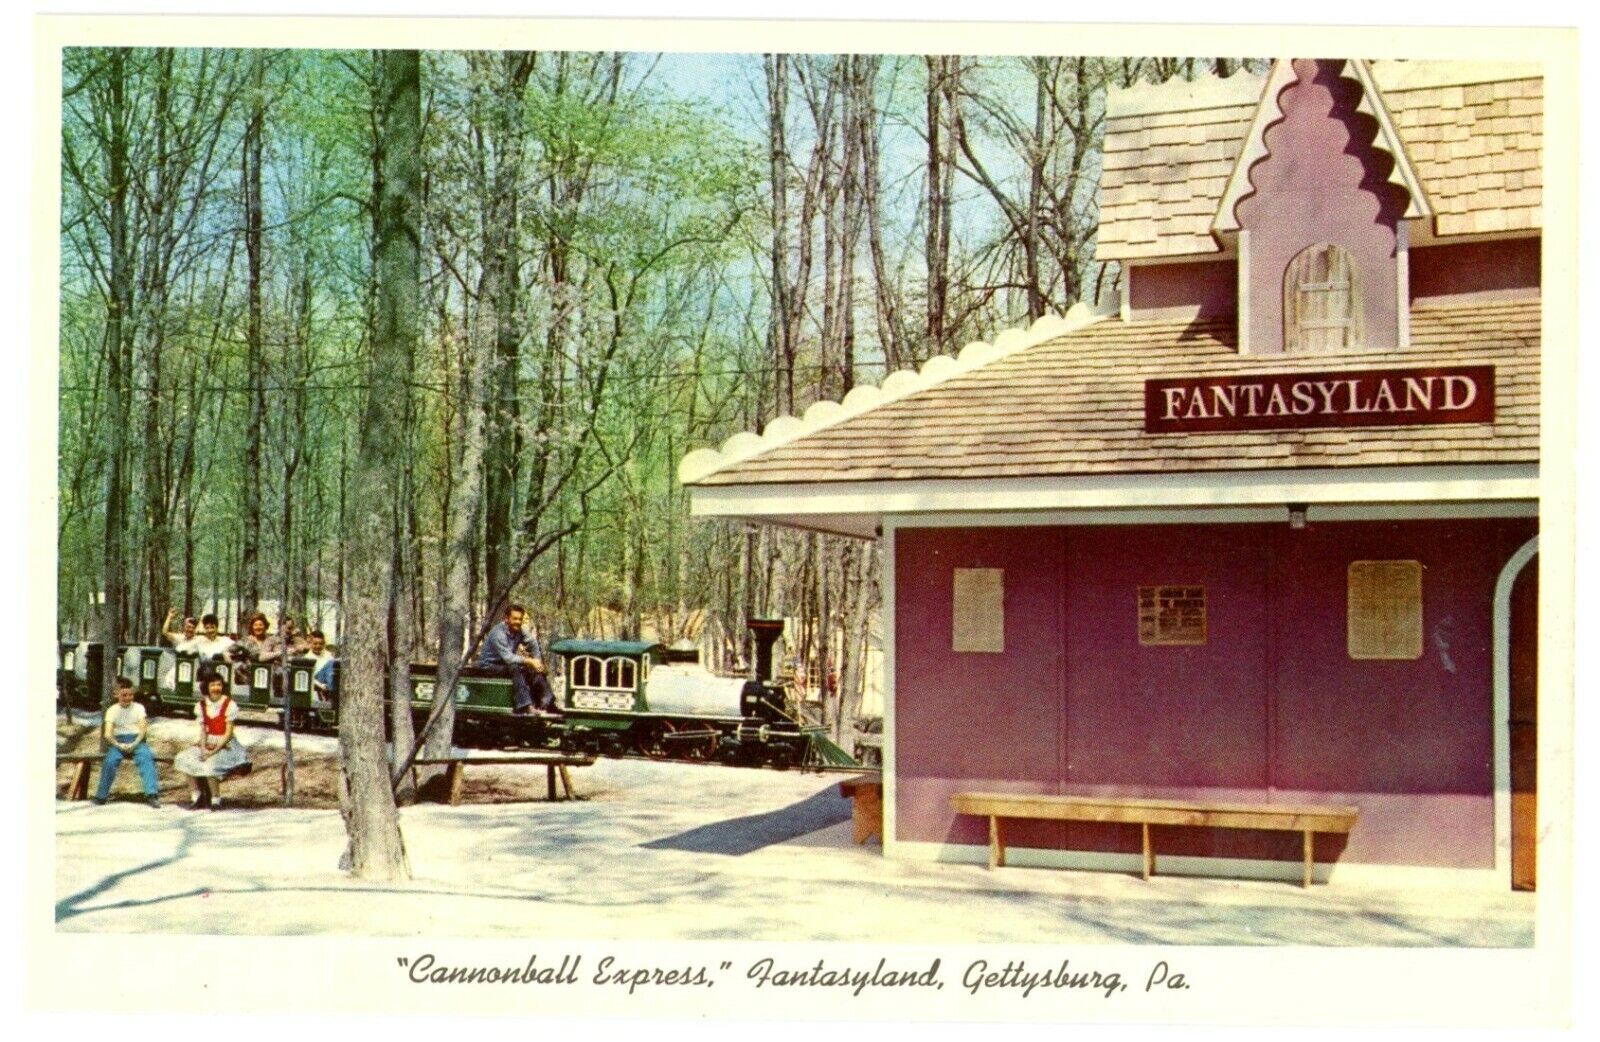 Cannonball Express At Fantasyland In Gettysburg, Pennsylvania Postcard